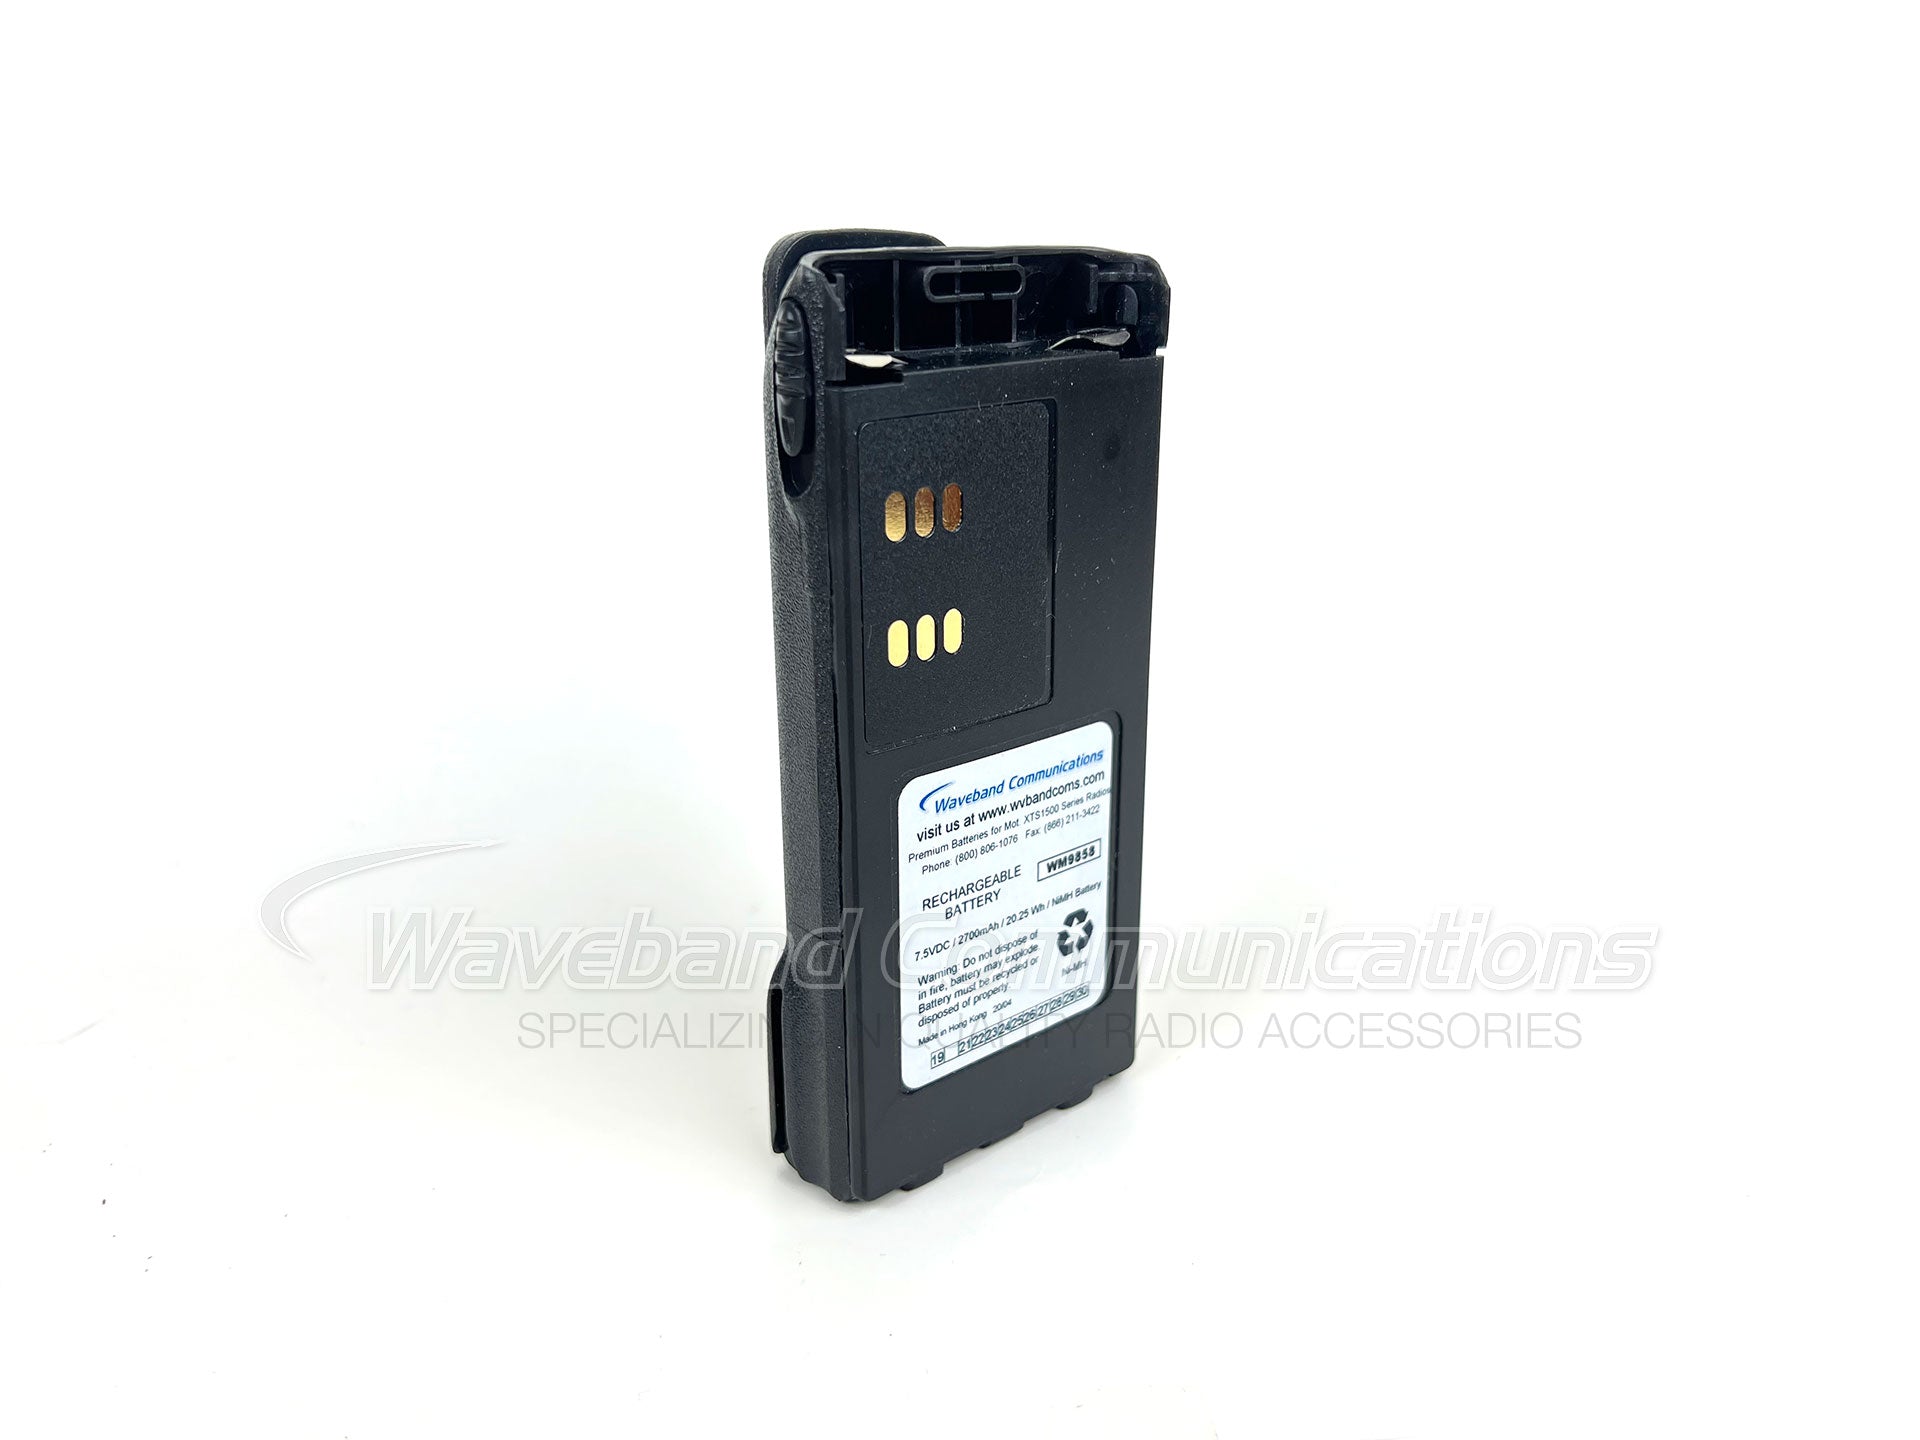 3400 Mah Lithium Ion Battery for Motorola XTS2500